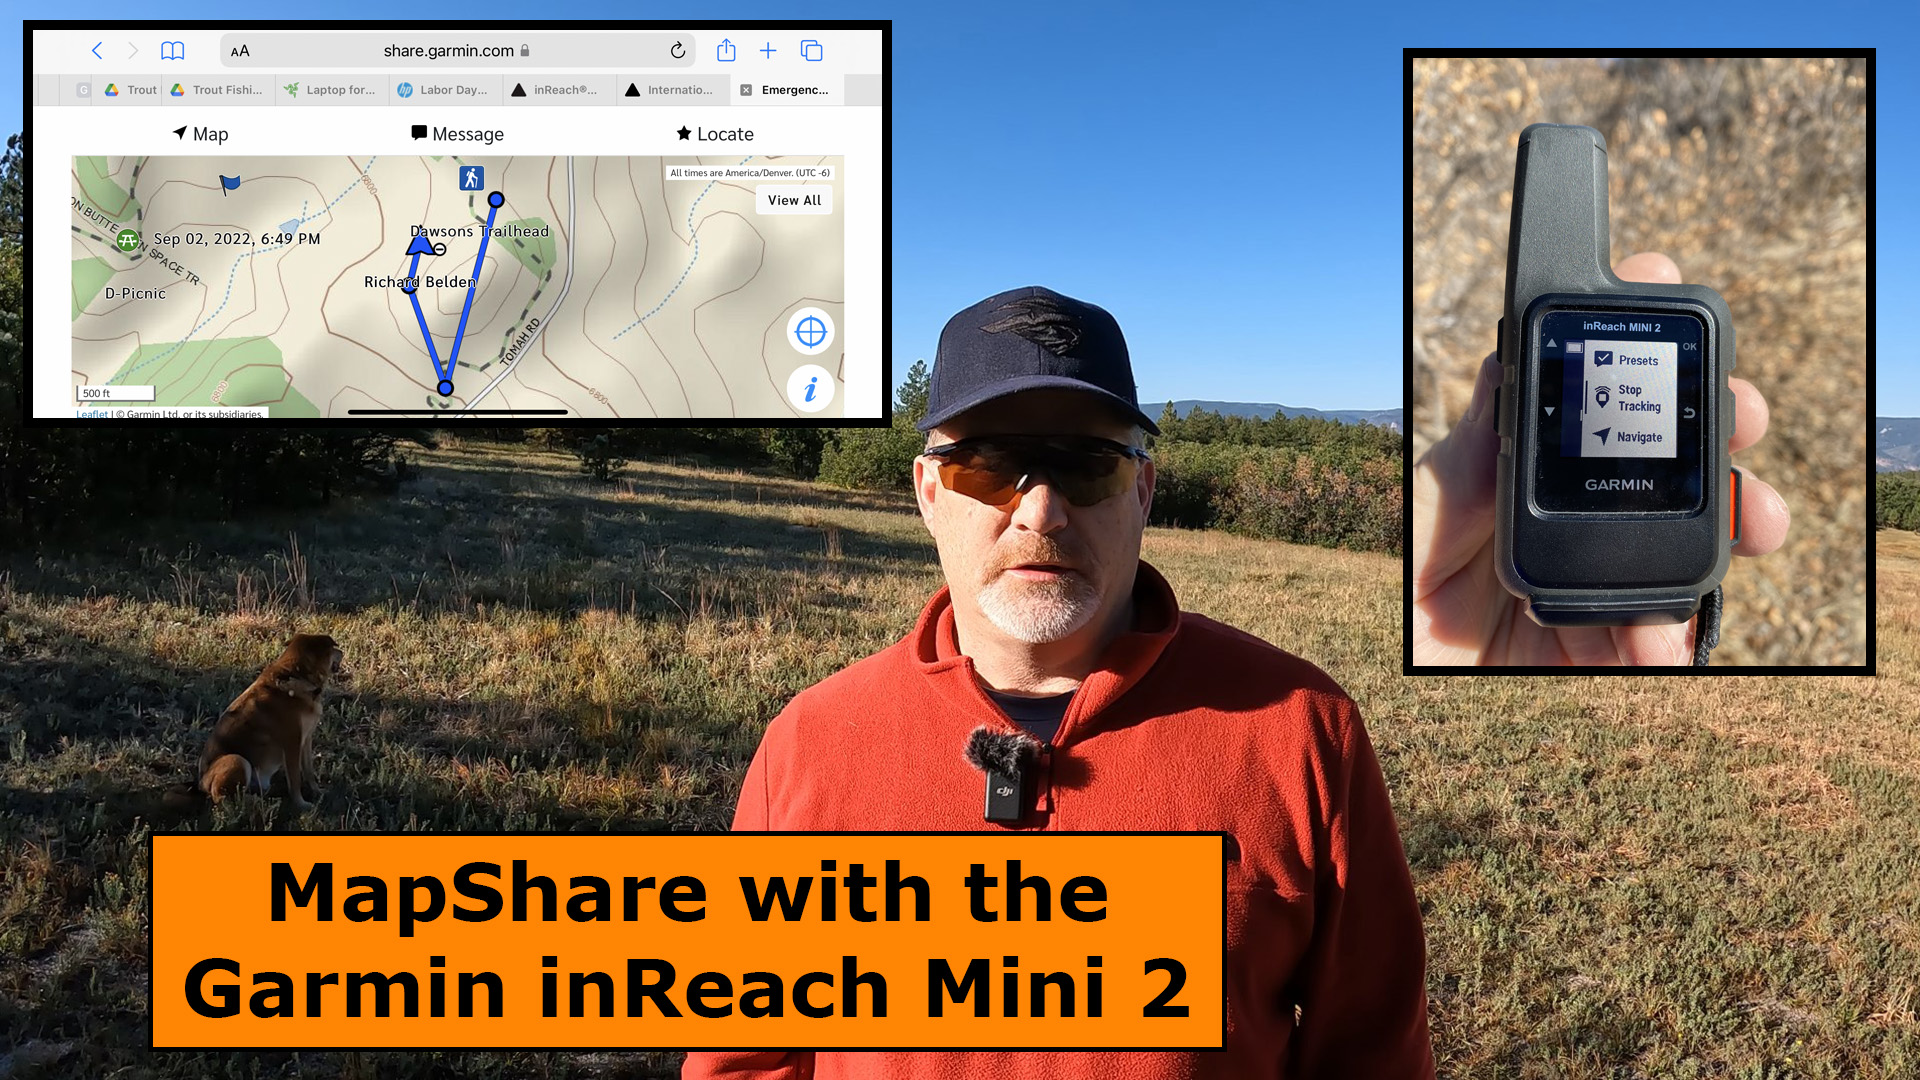 MapShare with Garmin inReach Mini 2